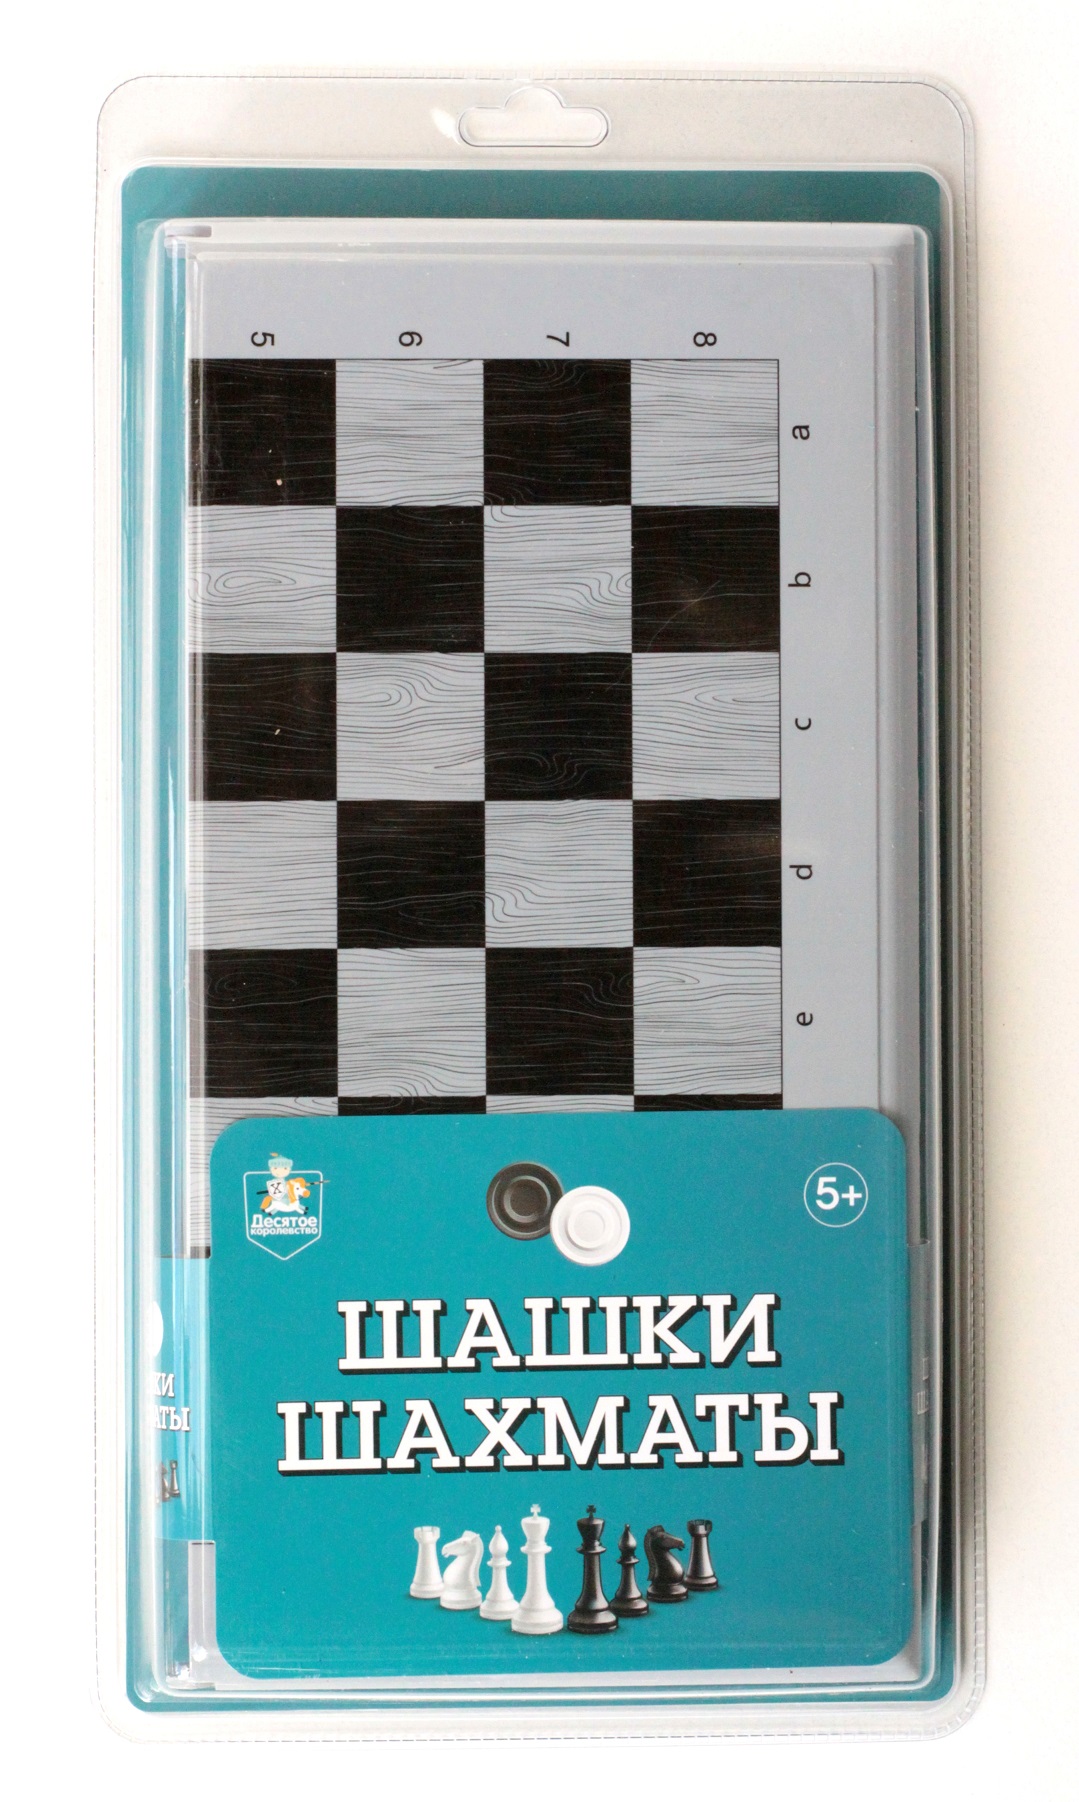 Игра настольная "Шашки-Шахматы" (бол, сер) блистер